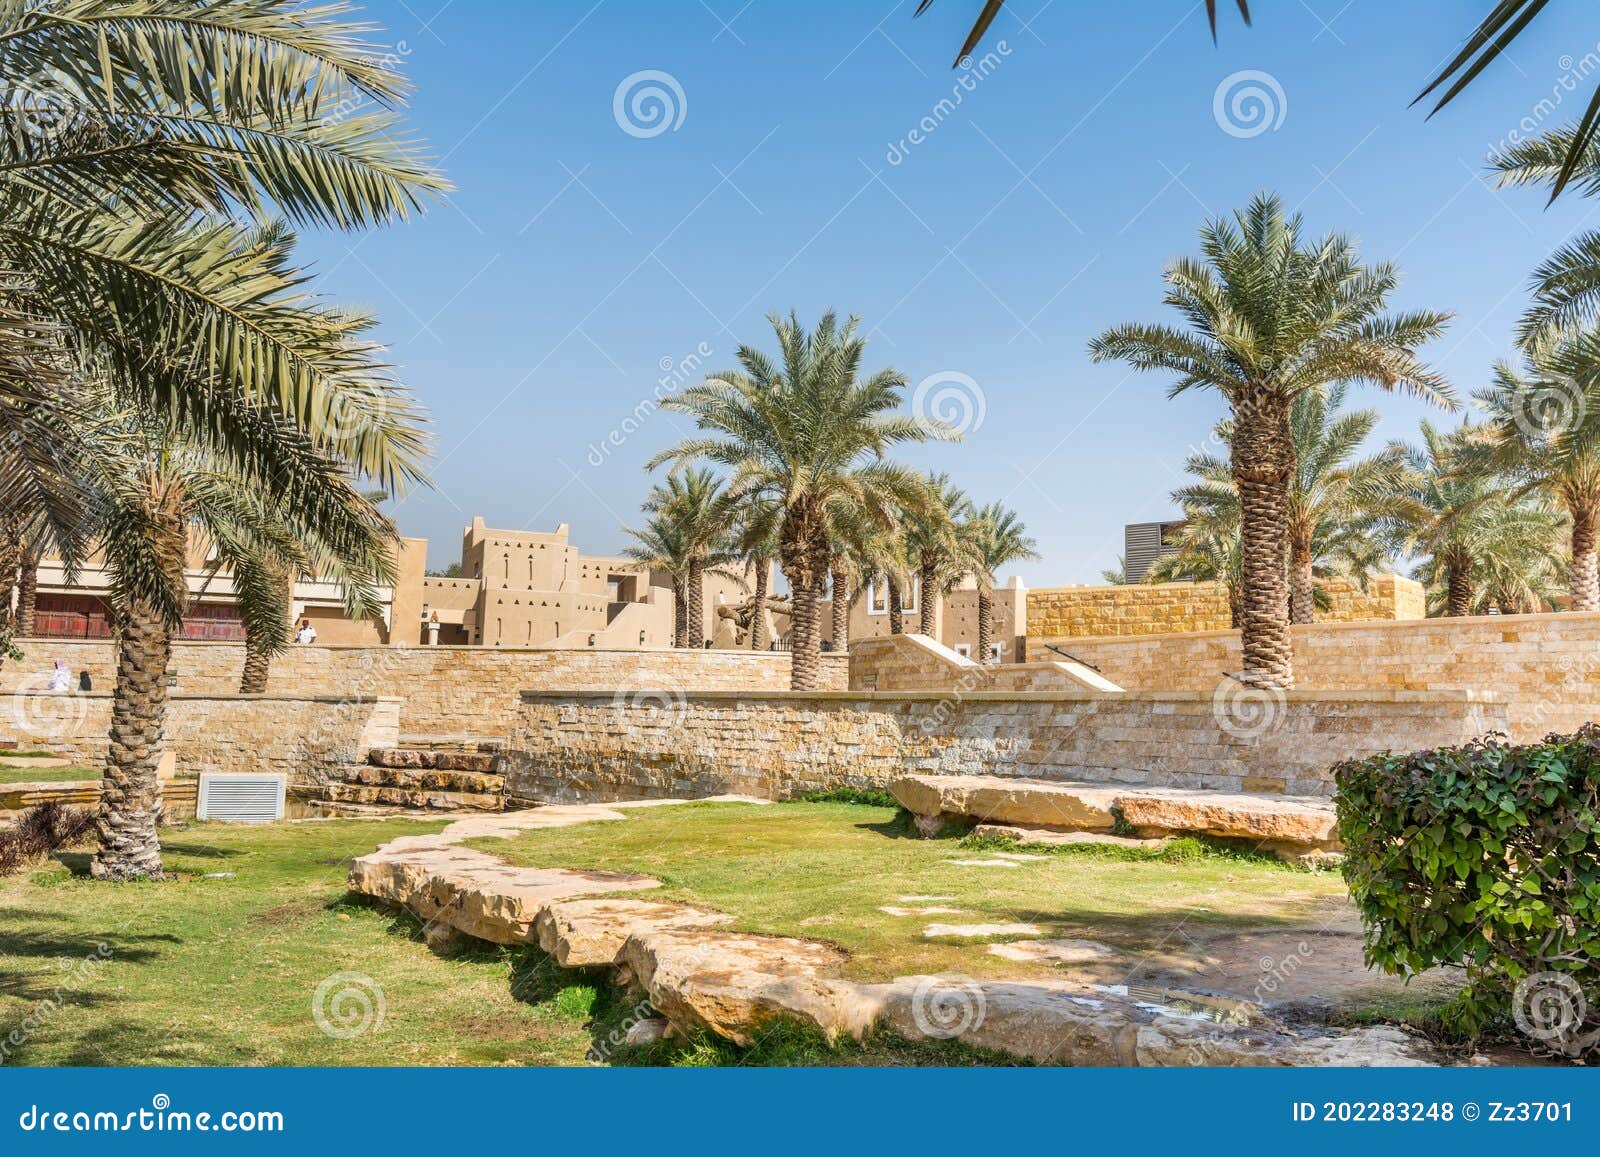 green palm trees growing in the park in the ruins of diraiyah, also as dereyeh and dariyya, a old town in riyadh, saudi arabia